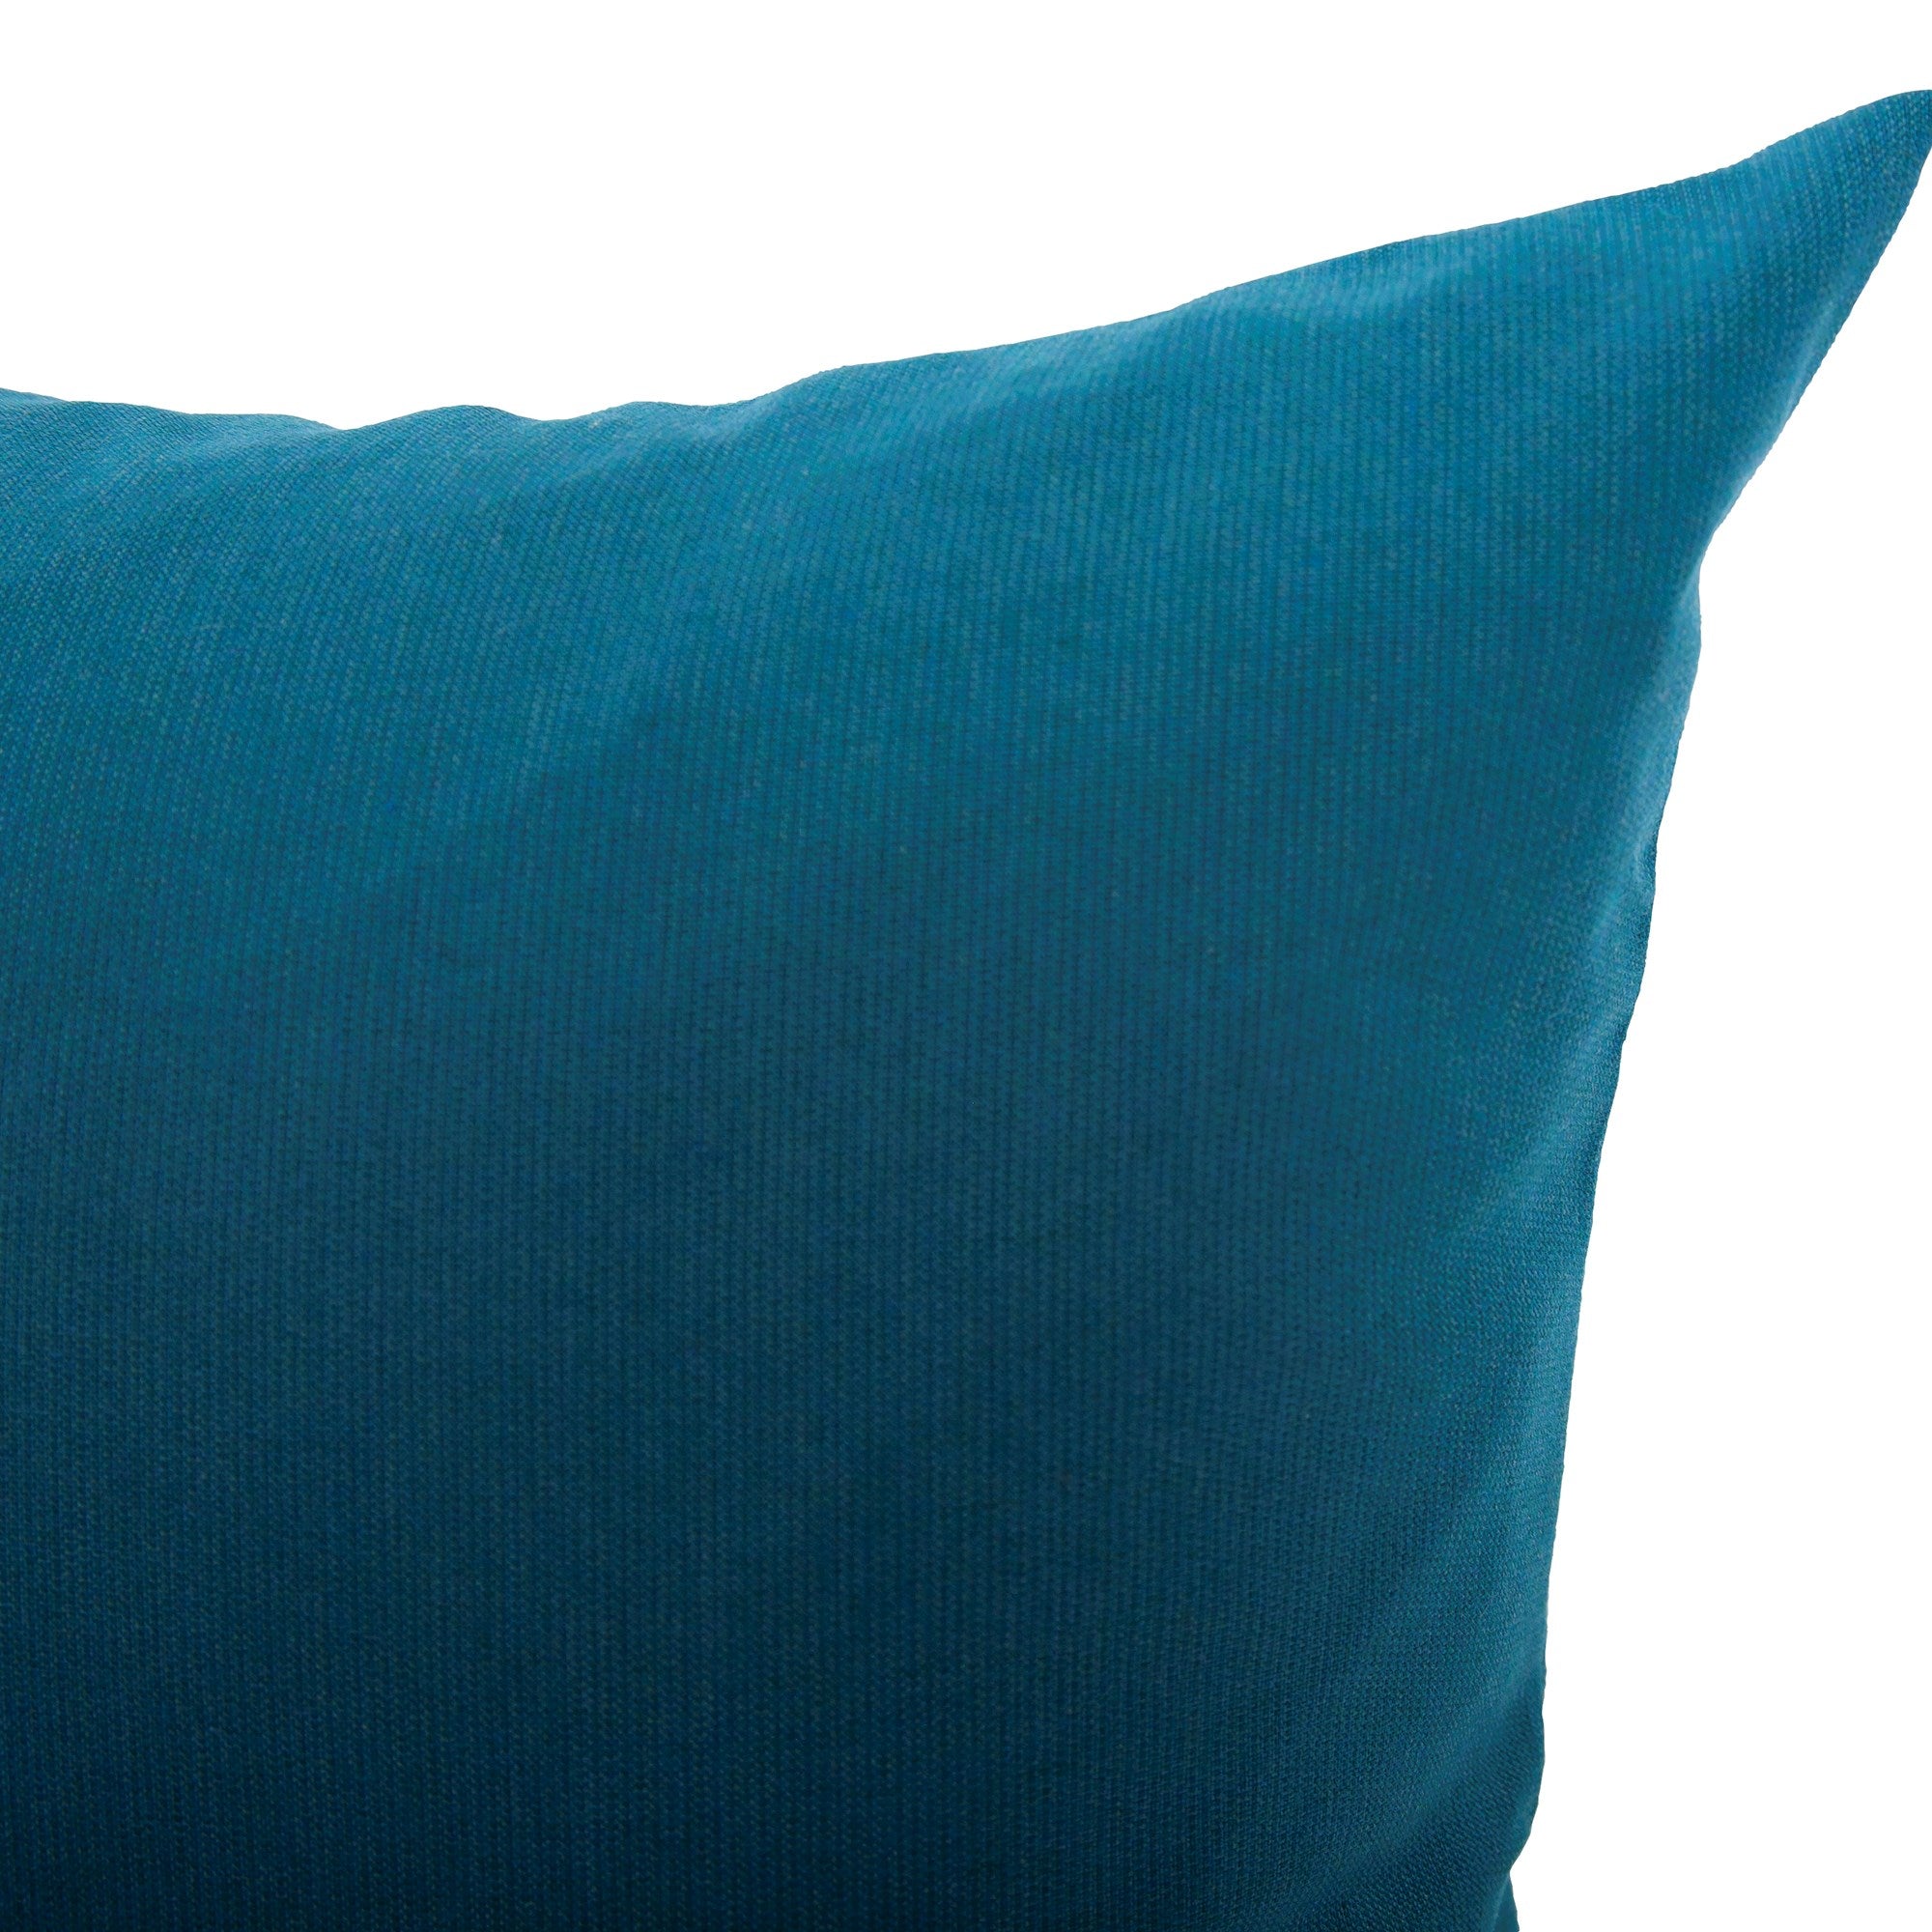 Seascape Turquoise Kidney Pillow- 11" x 22"